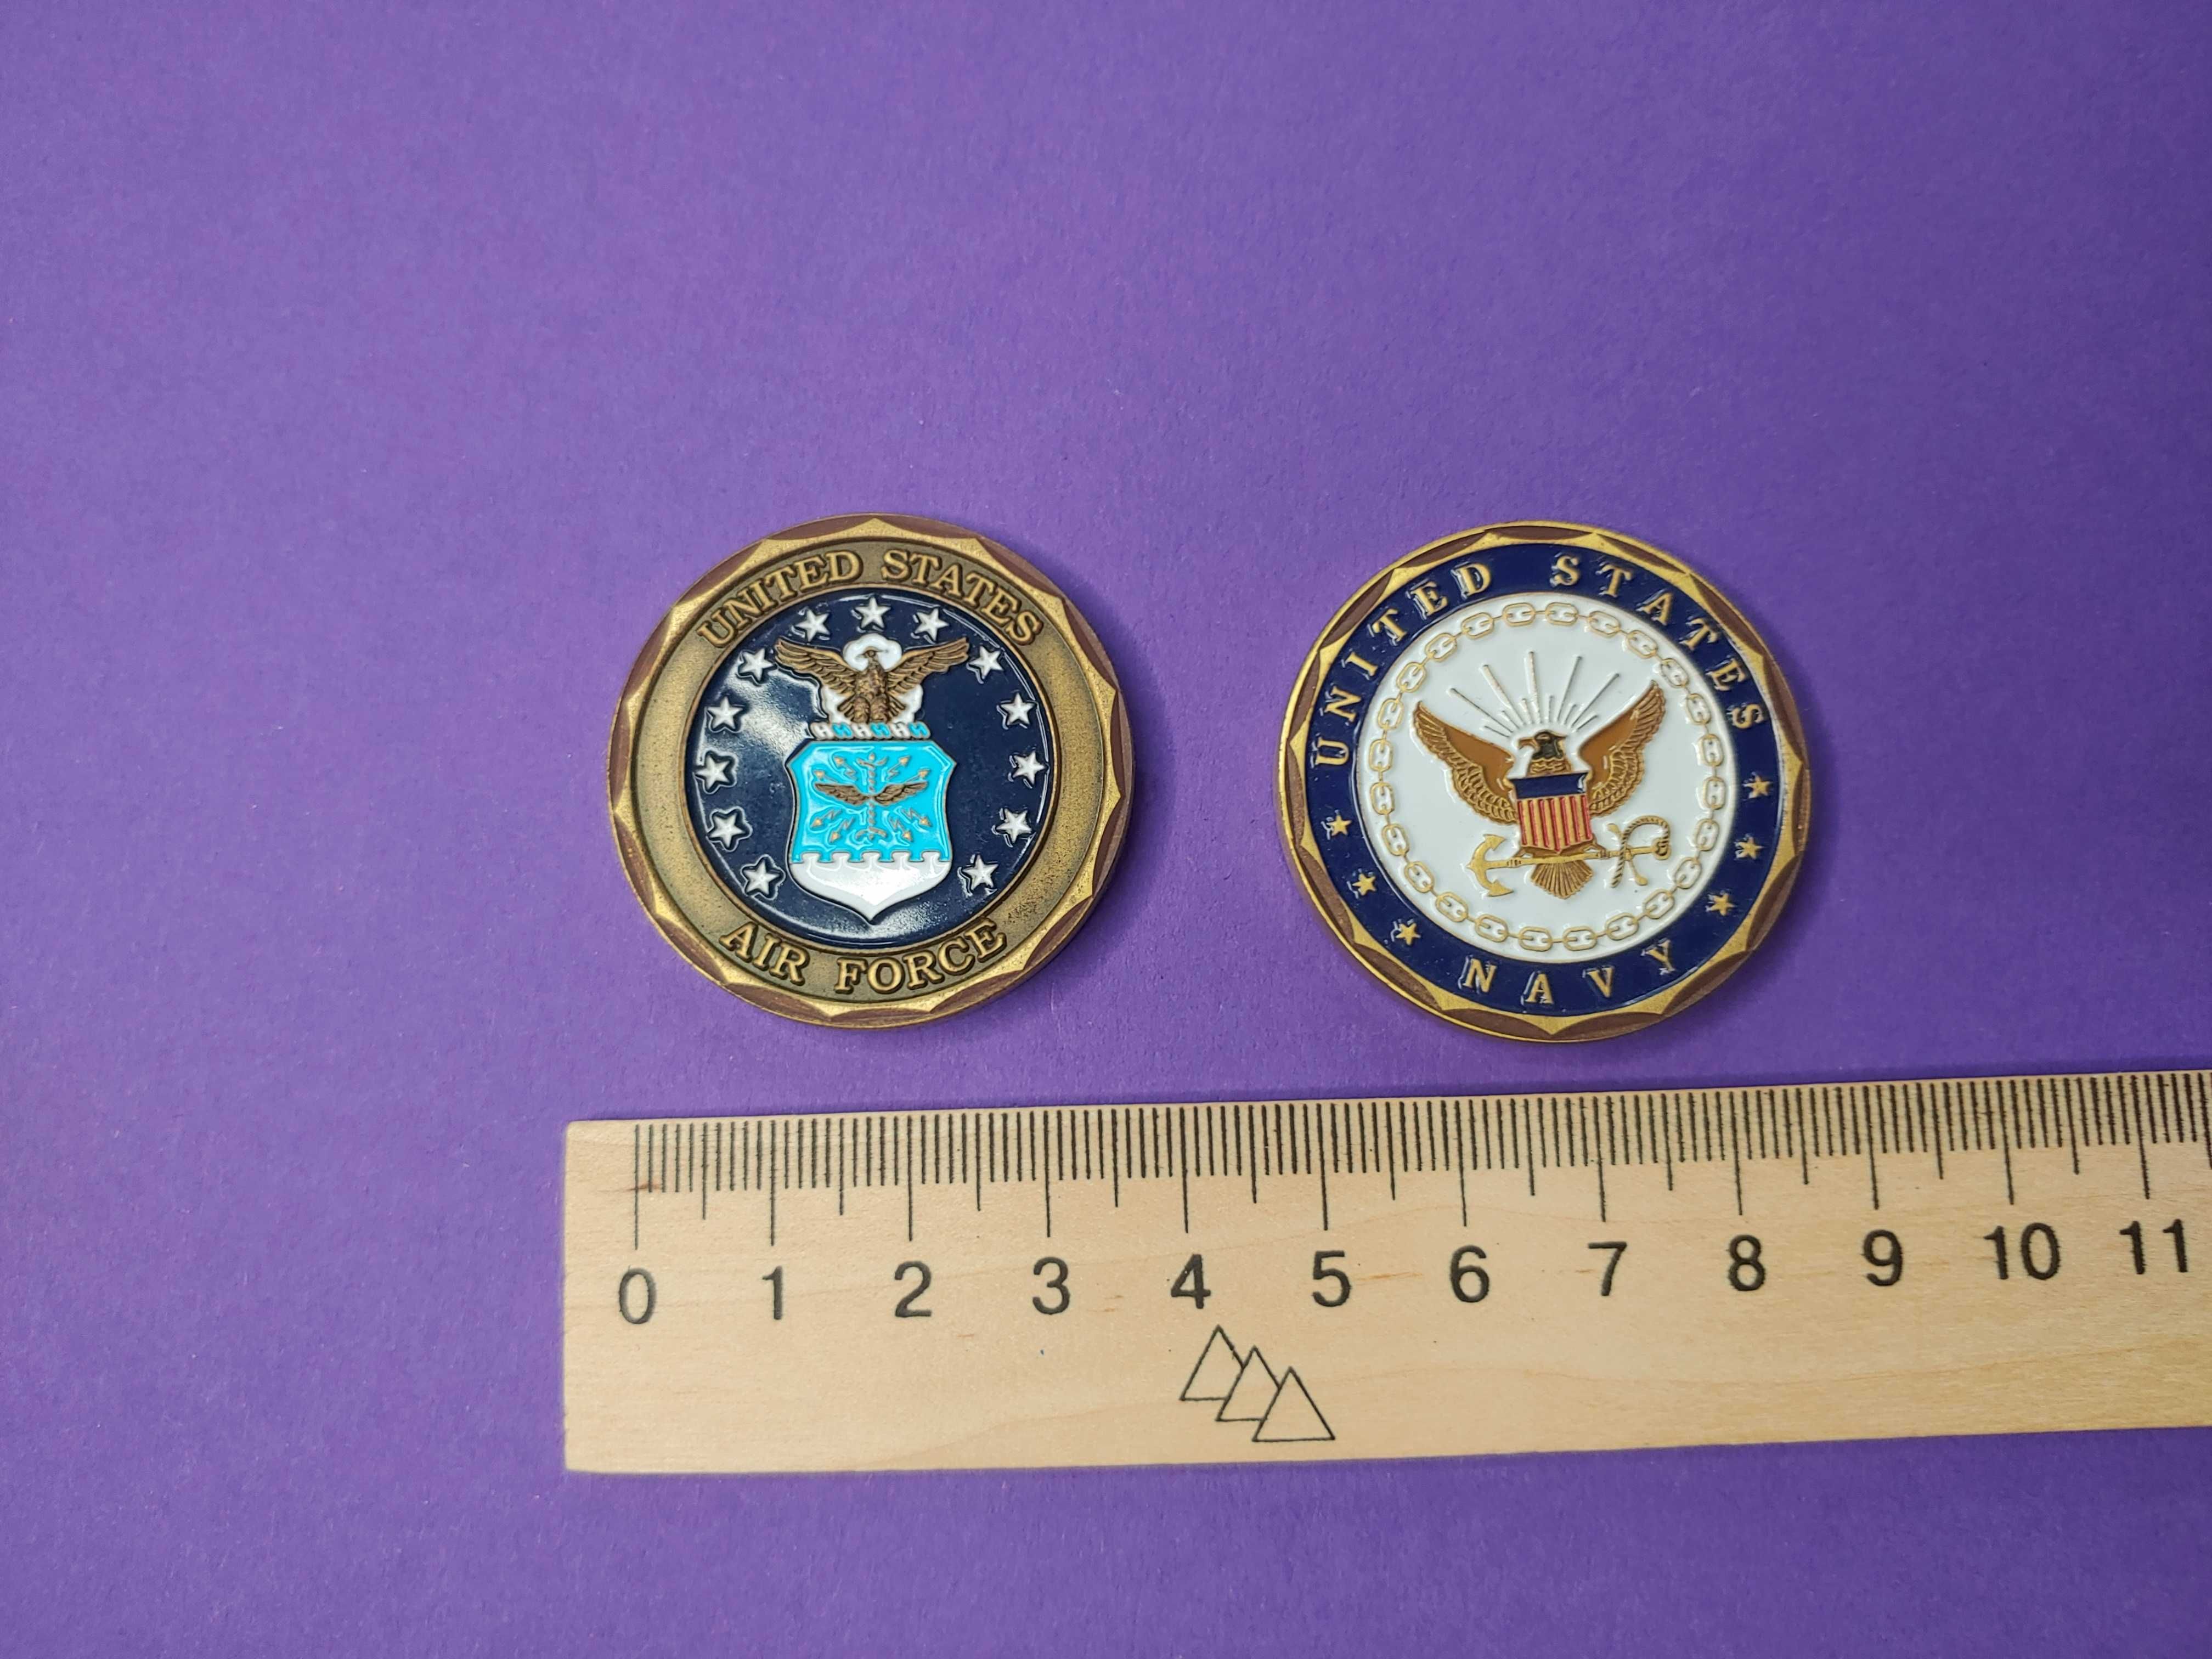 Challenge coin - Монета претендента - монета воинского братства США